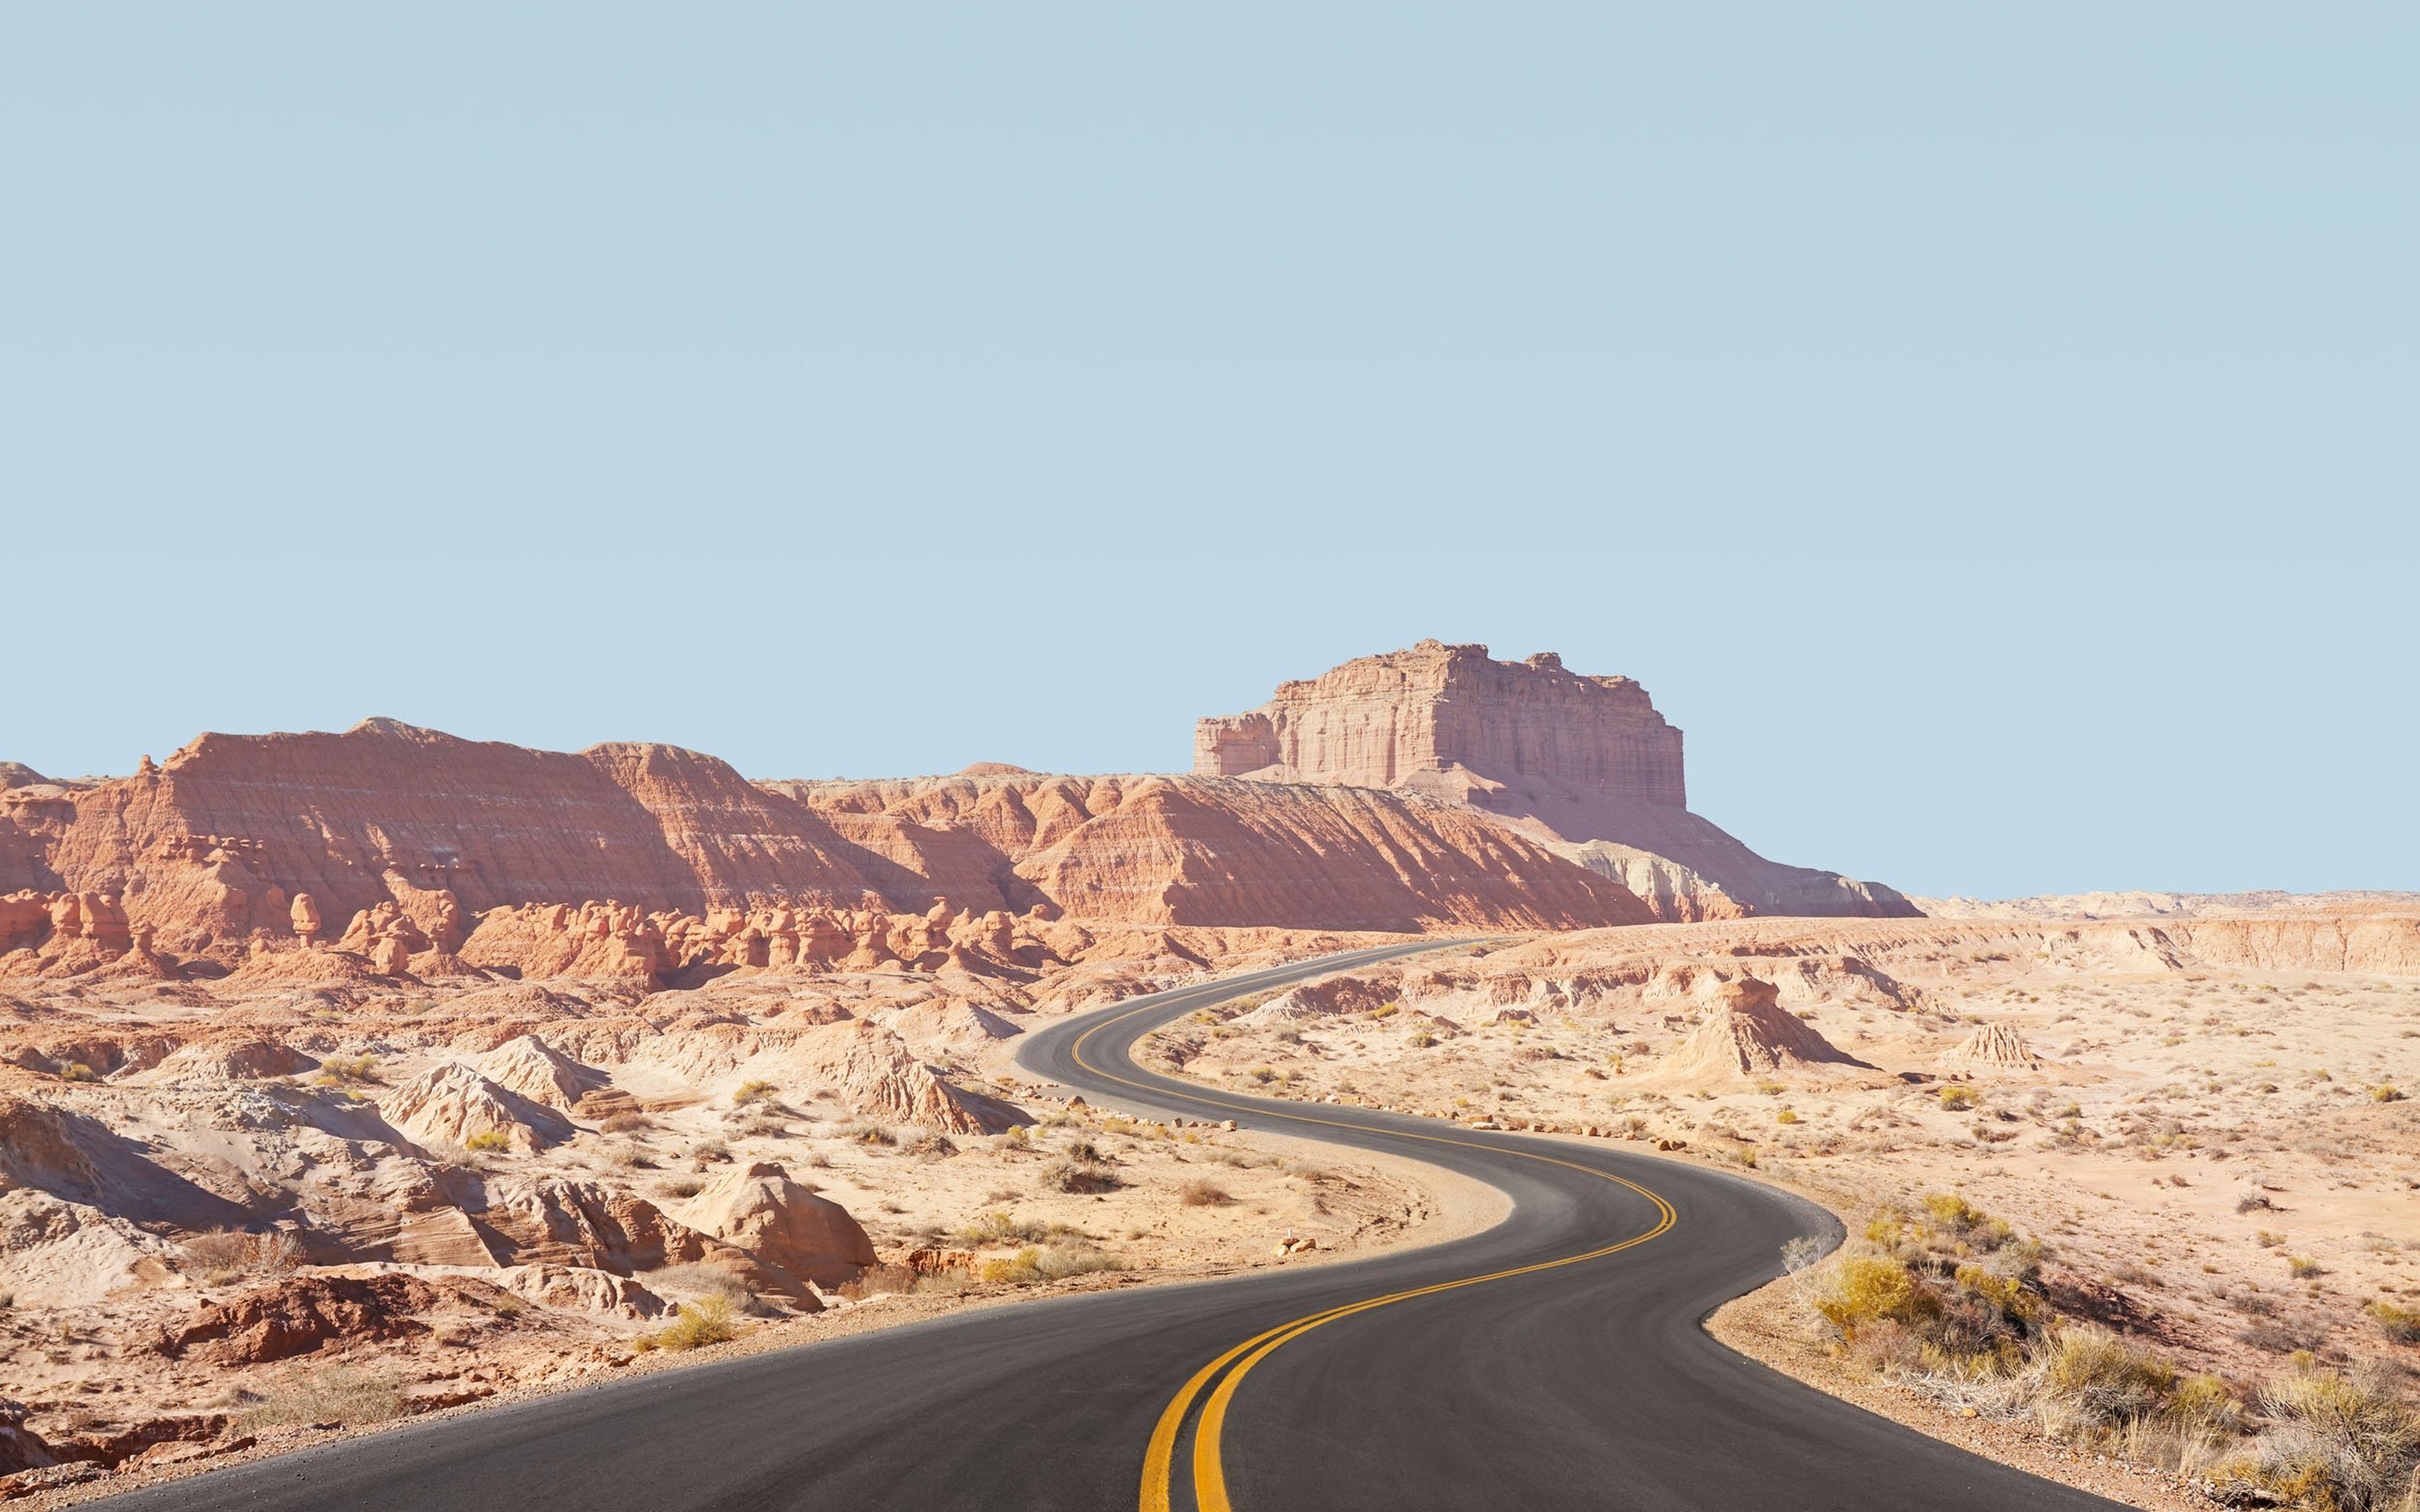 Winding empty road through arid desert landscape.